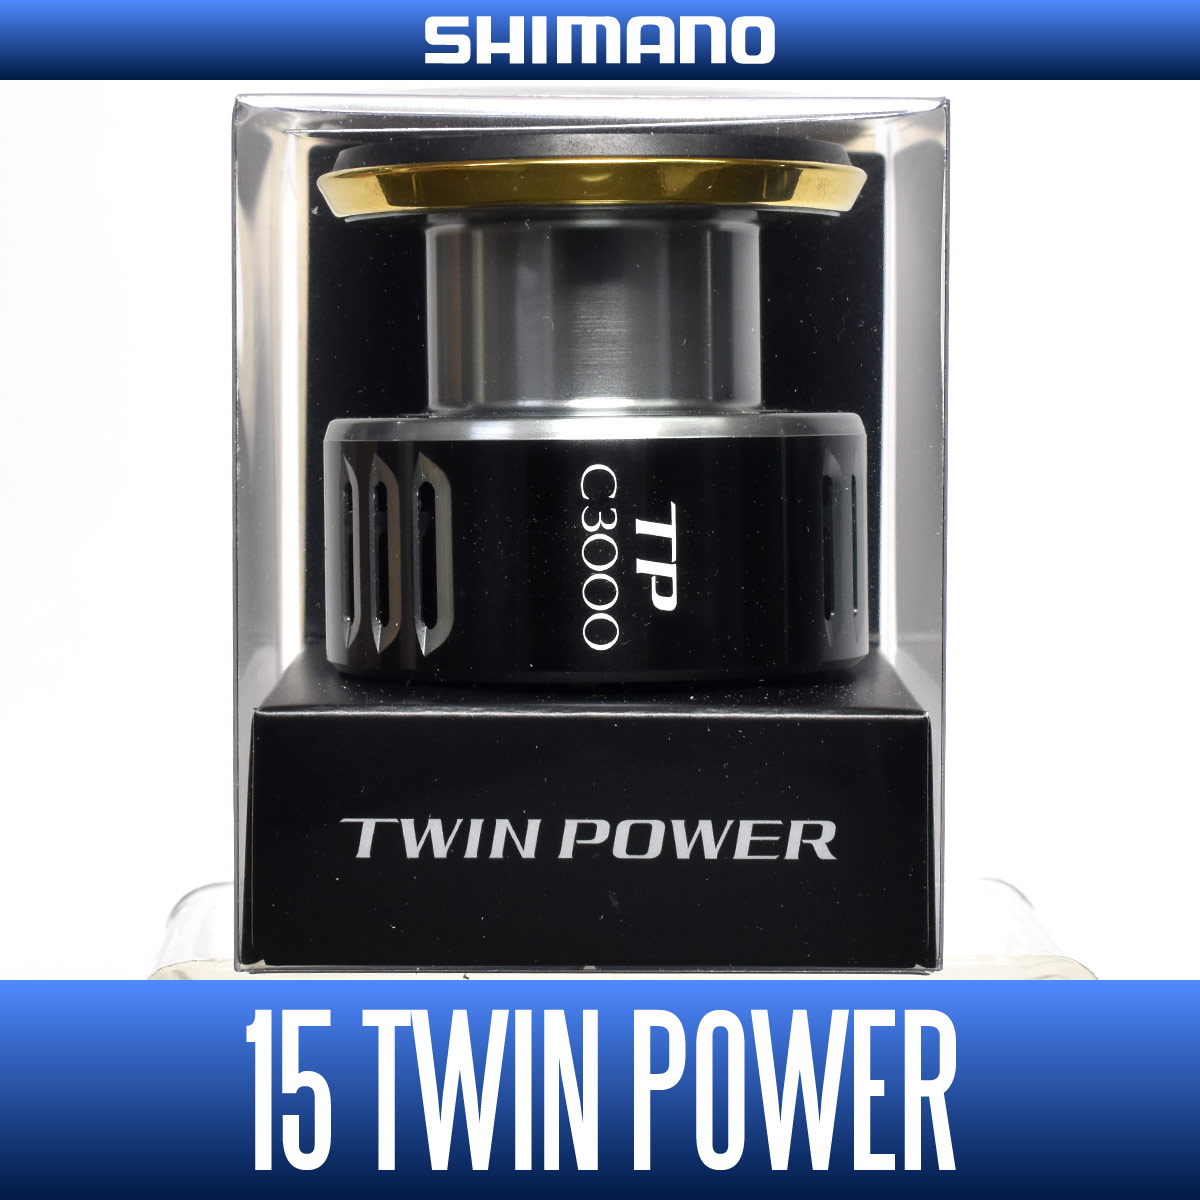 SHIMANO 15 TWINPOWER SPOOL SHIMANO GENUINE PART